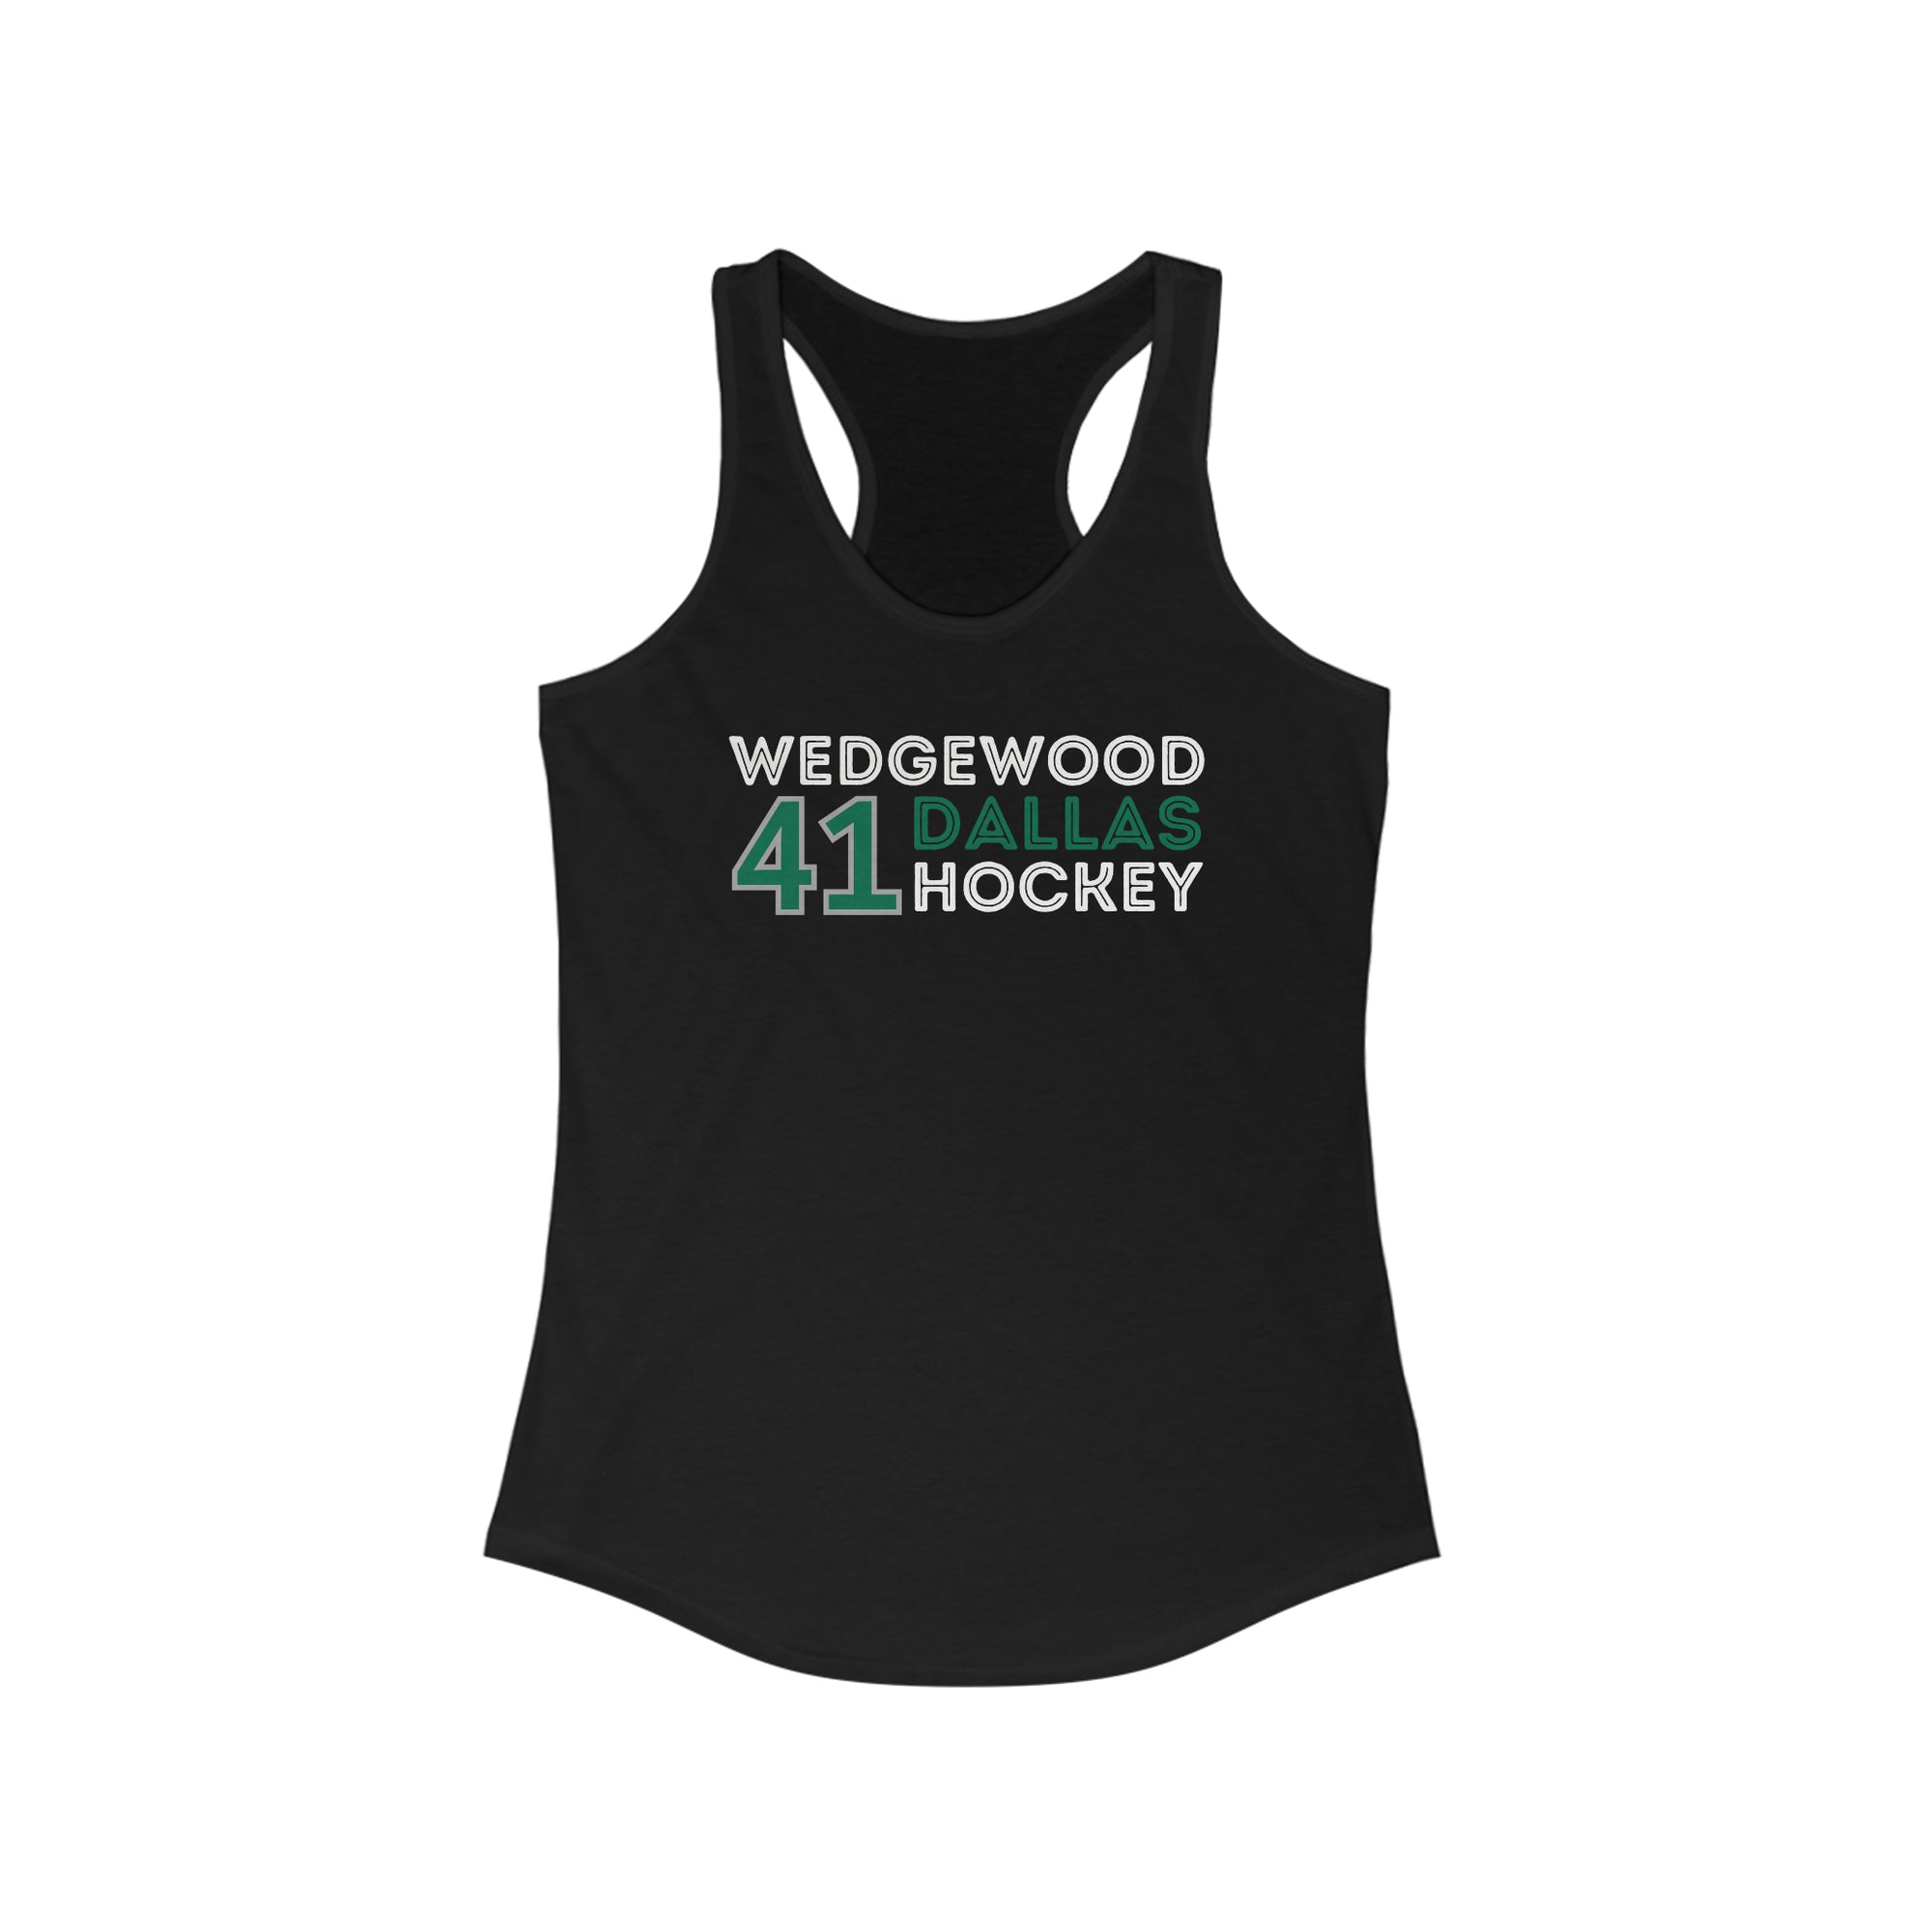 Wedgewood 41 Dallas Hockey Grafitti Wall Design Women's Ideal Racerback Tank Top